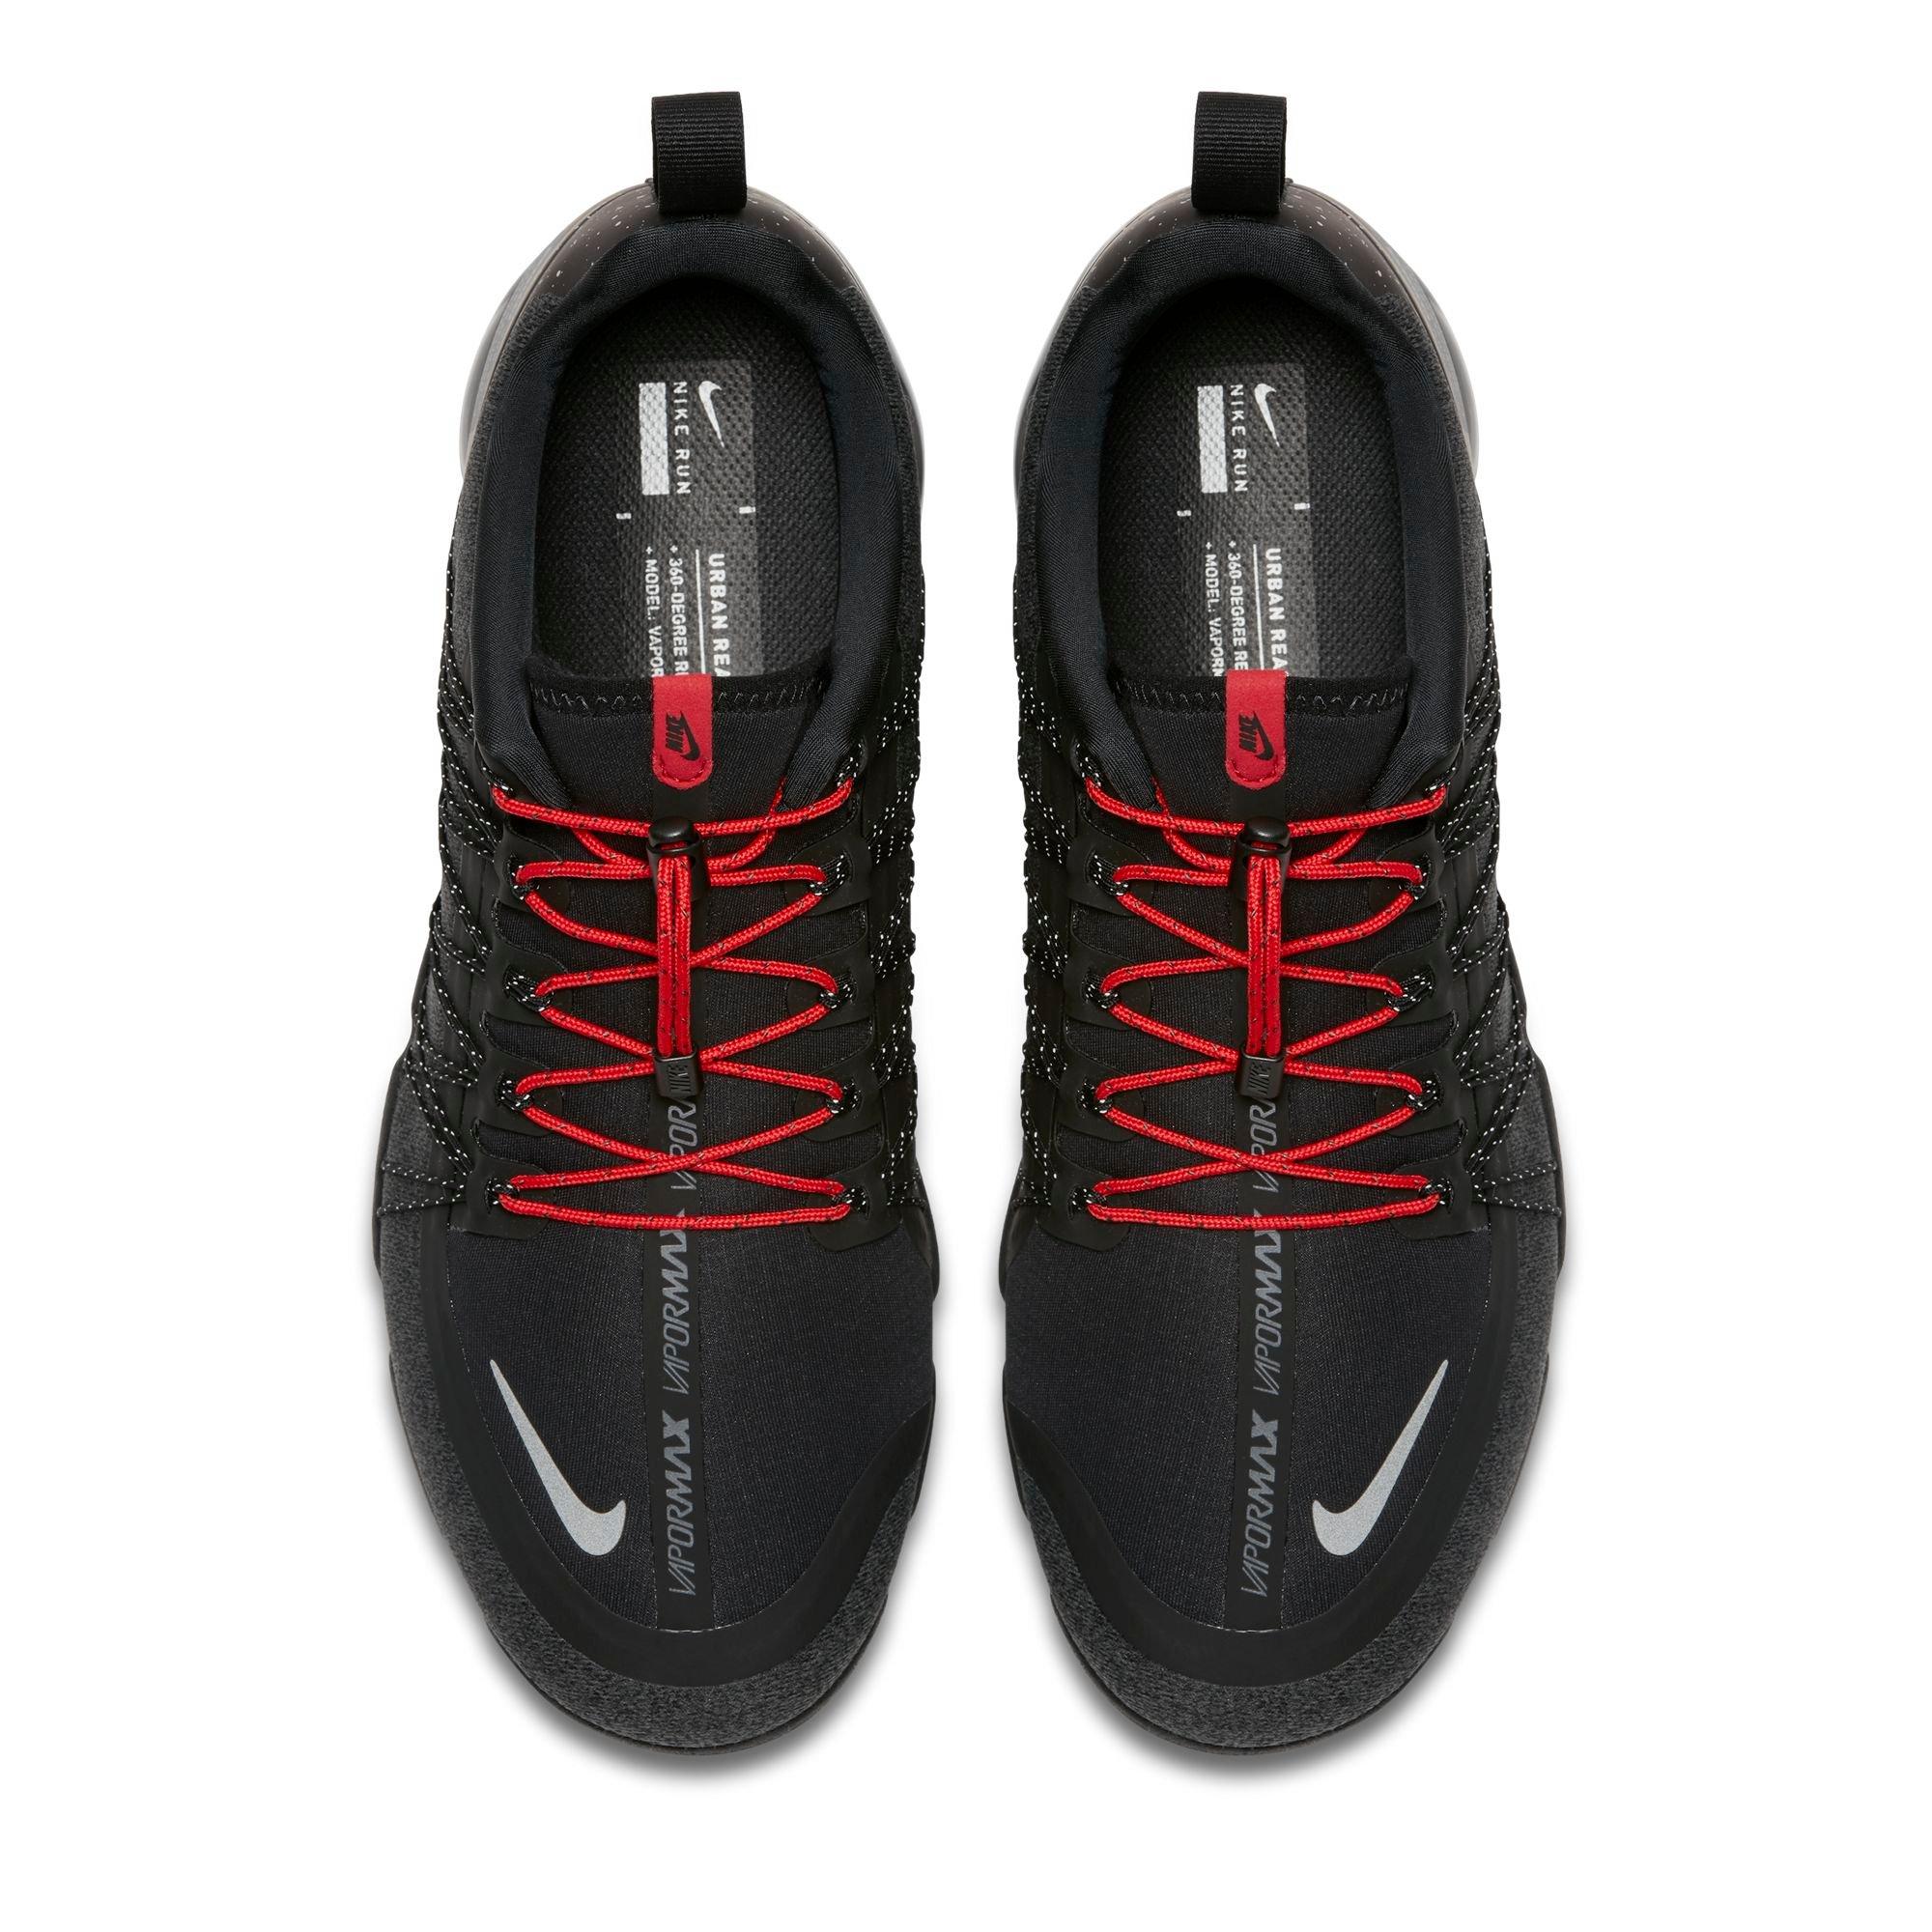 vapormax utility black red laces